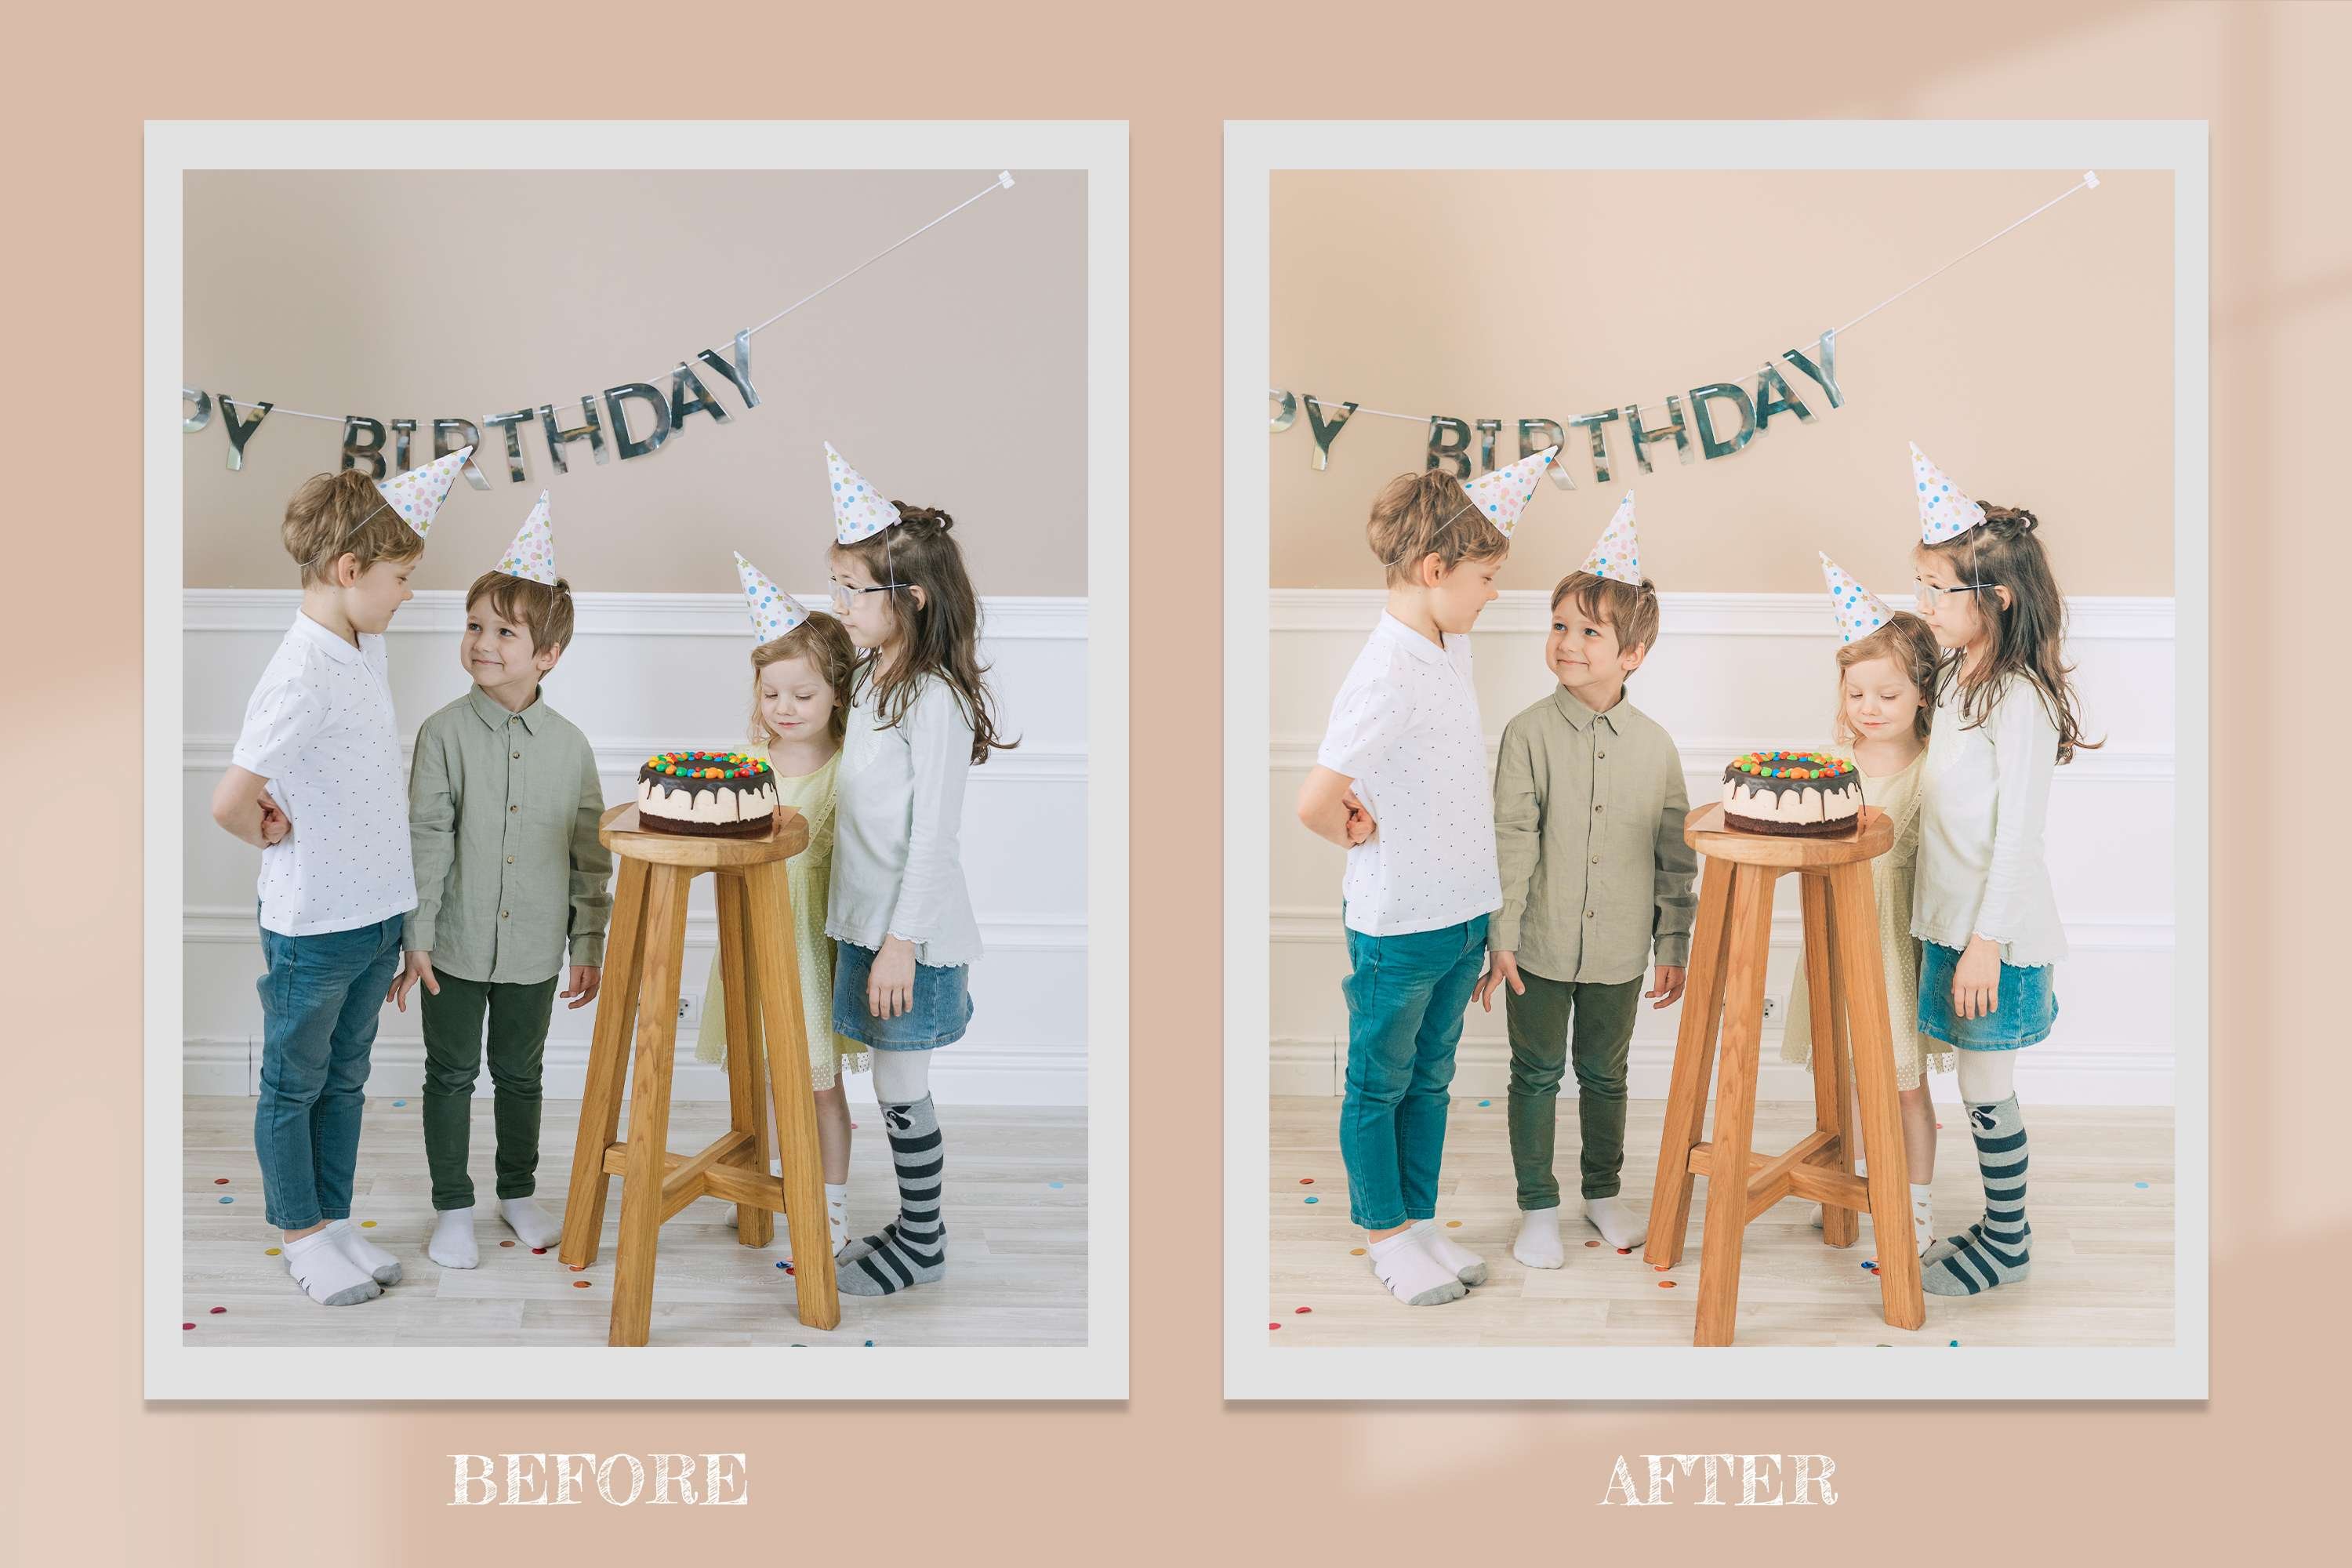 Birthday Photoshop Actions Lightroom 6281353